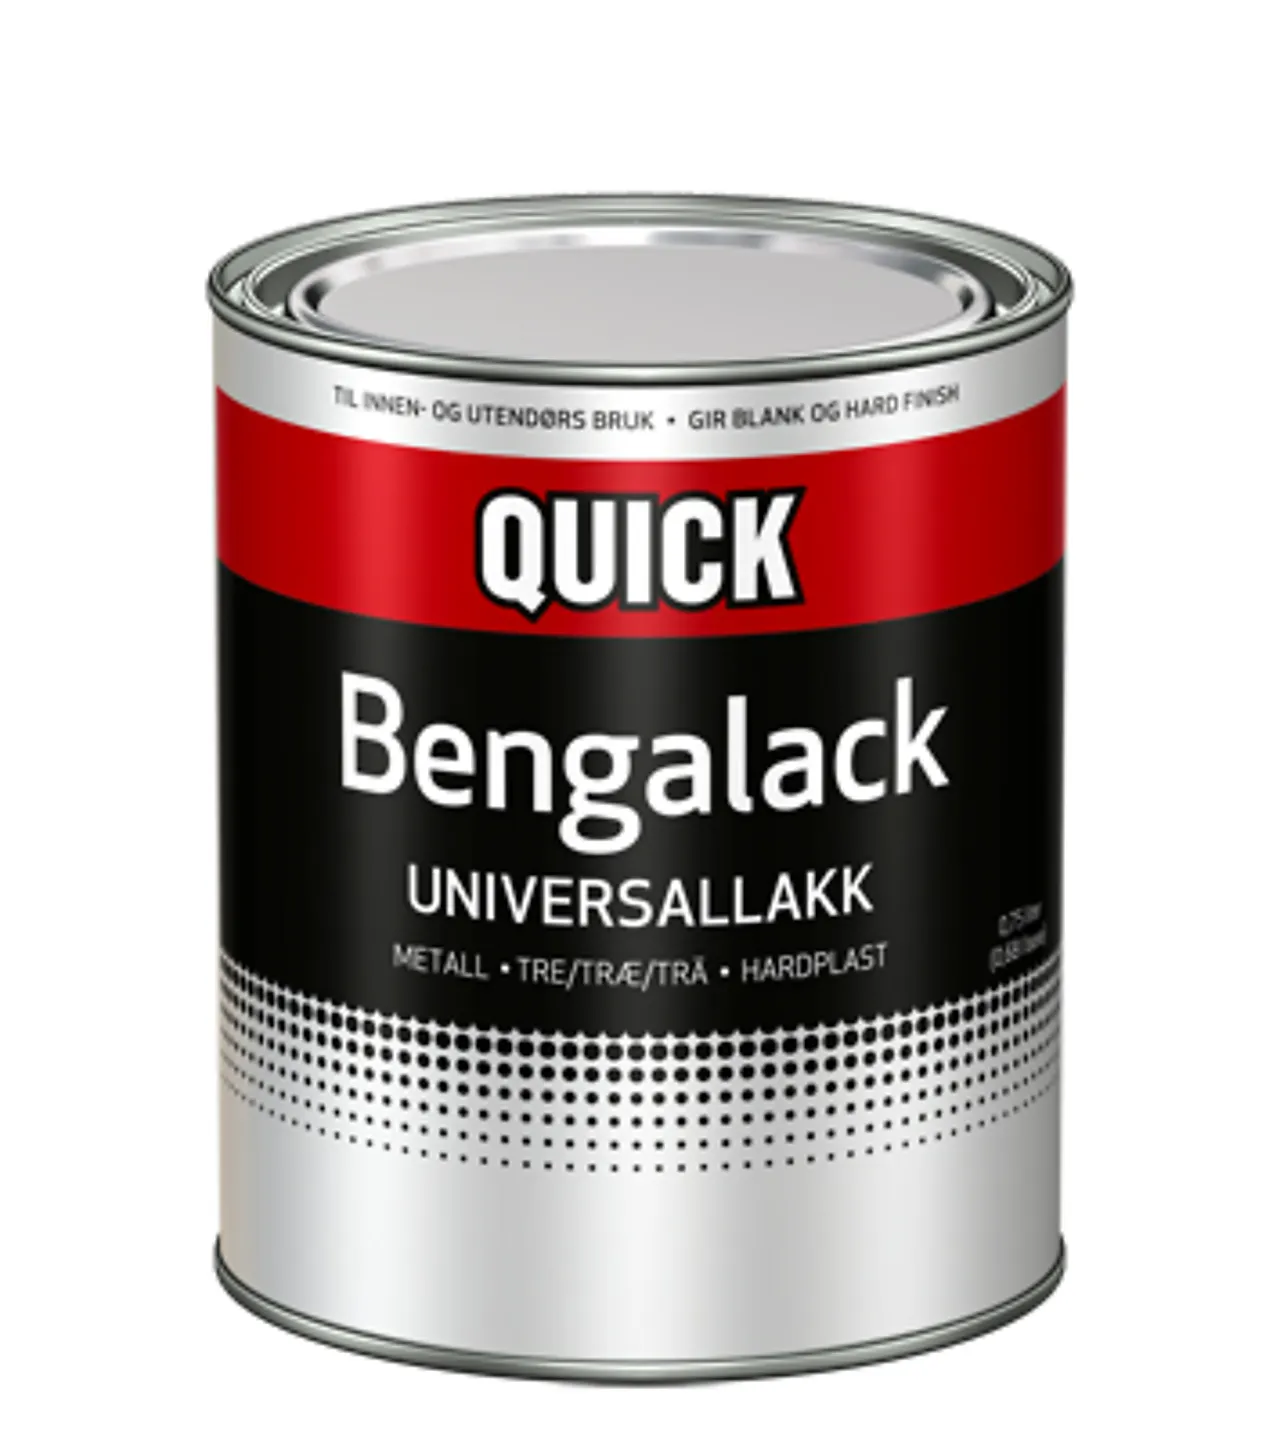 Bengalack universallakk 0,68 liter gul/orange blank